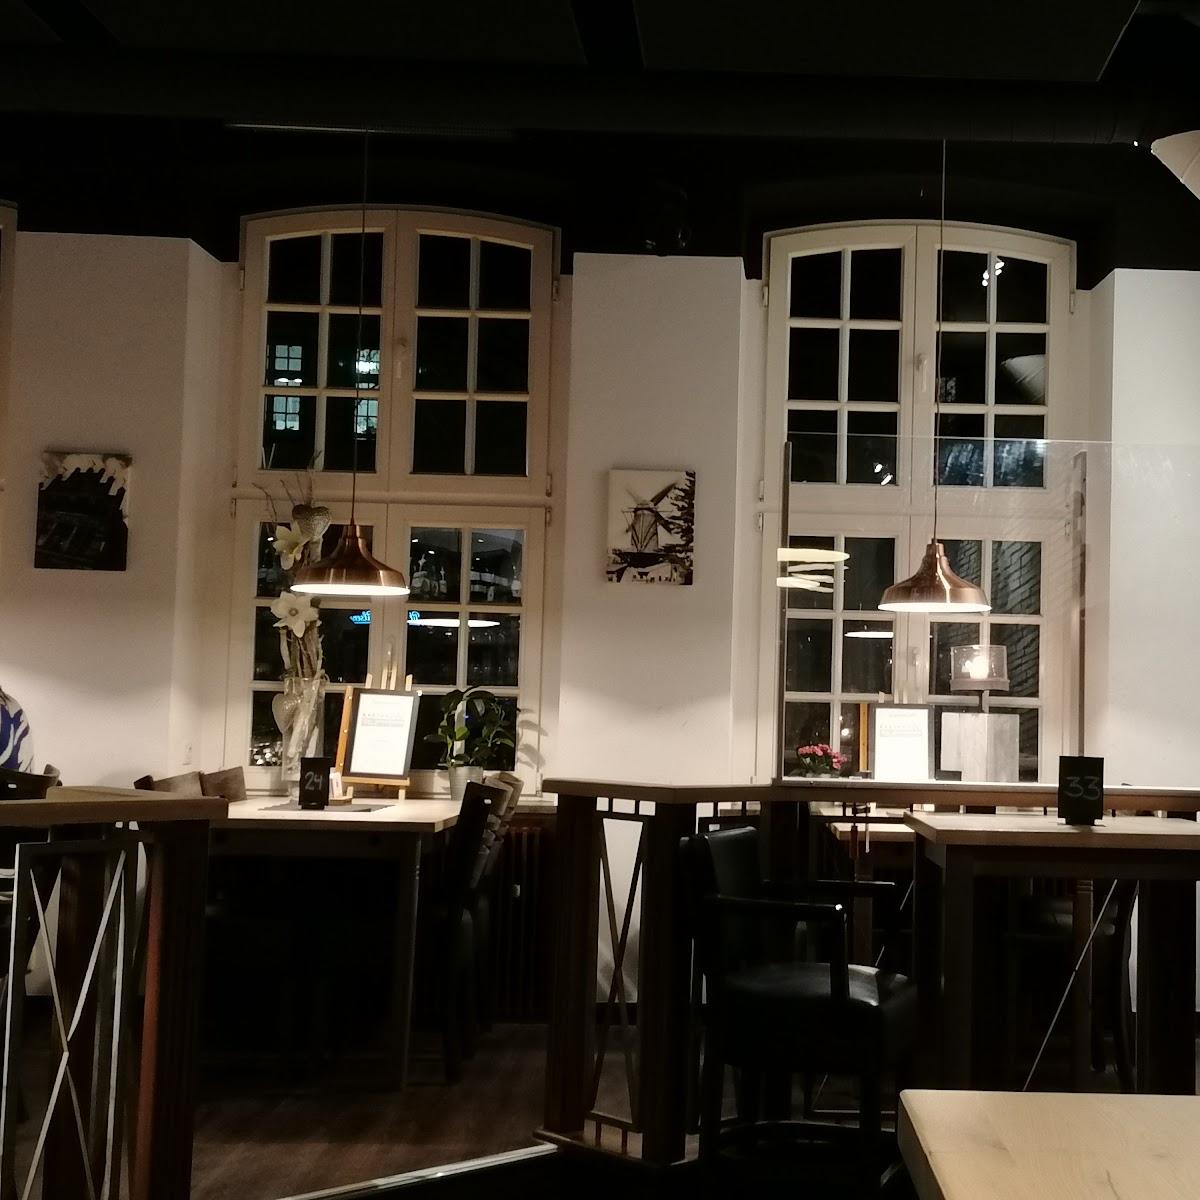 Restaurant "Karthaus" in Xanten